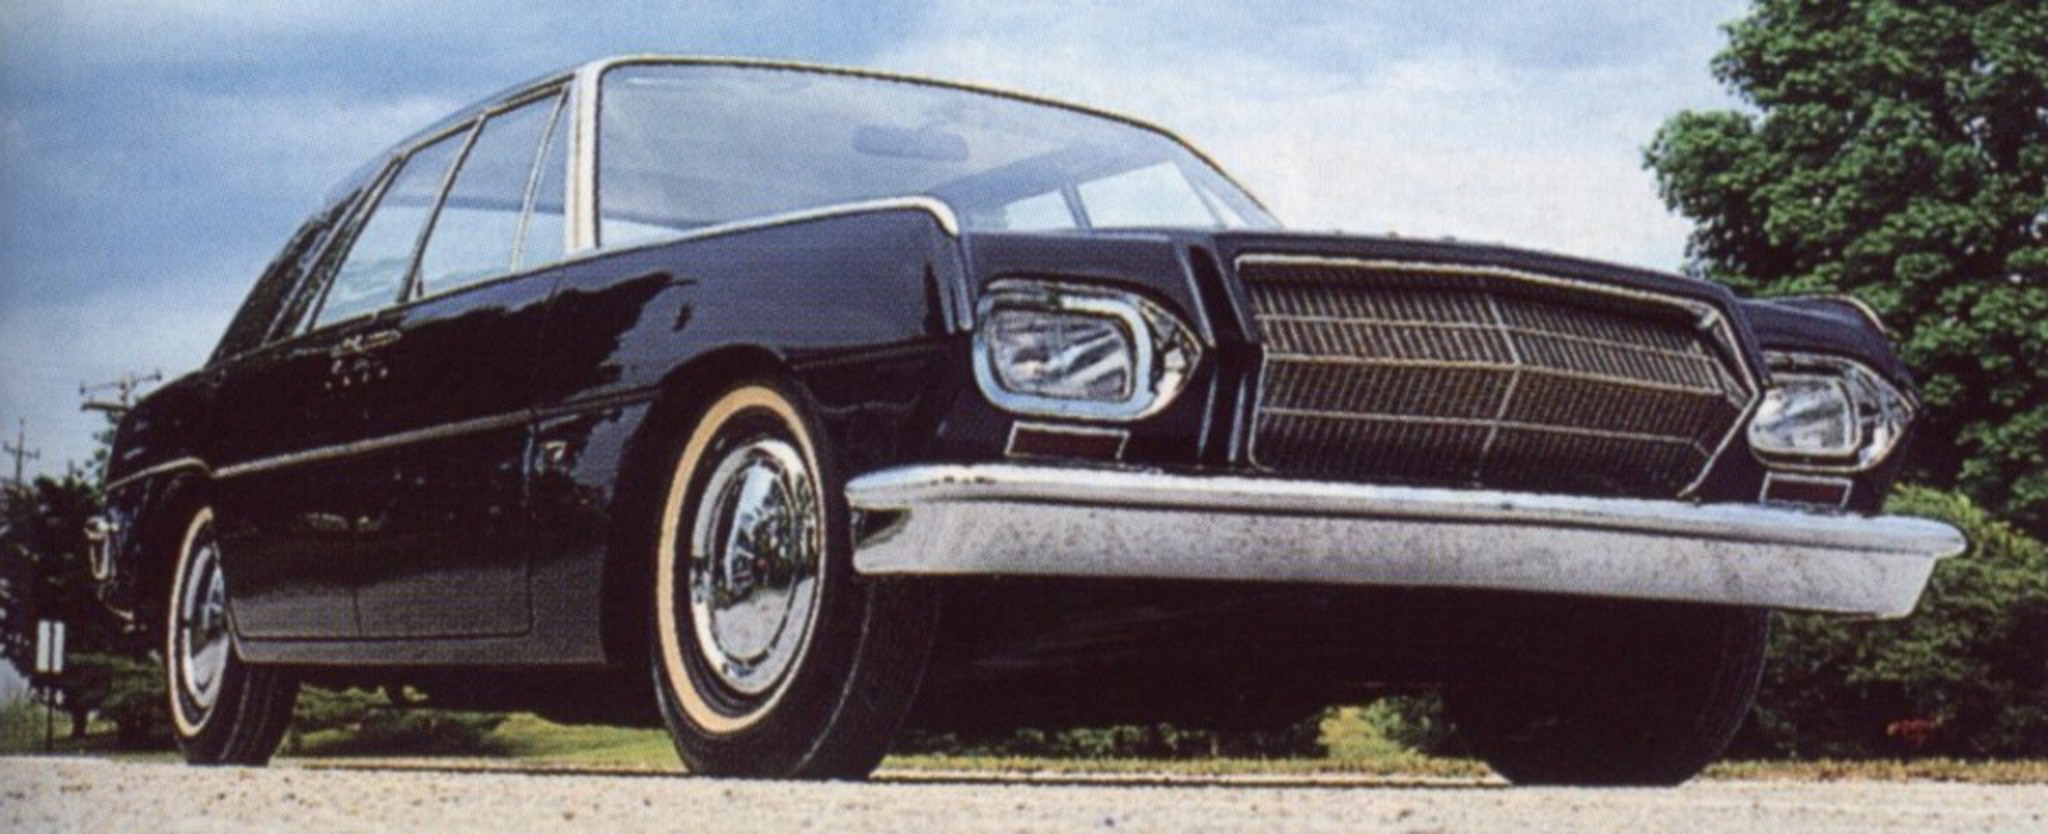 1964 Studebaker GT Hawk - Concepts